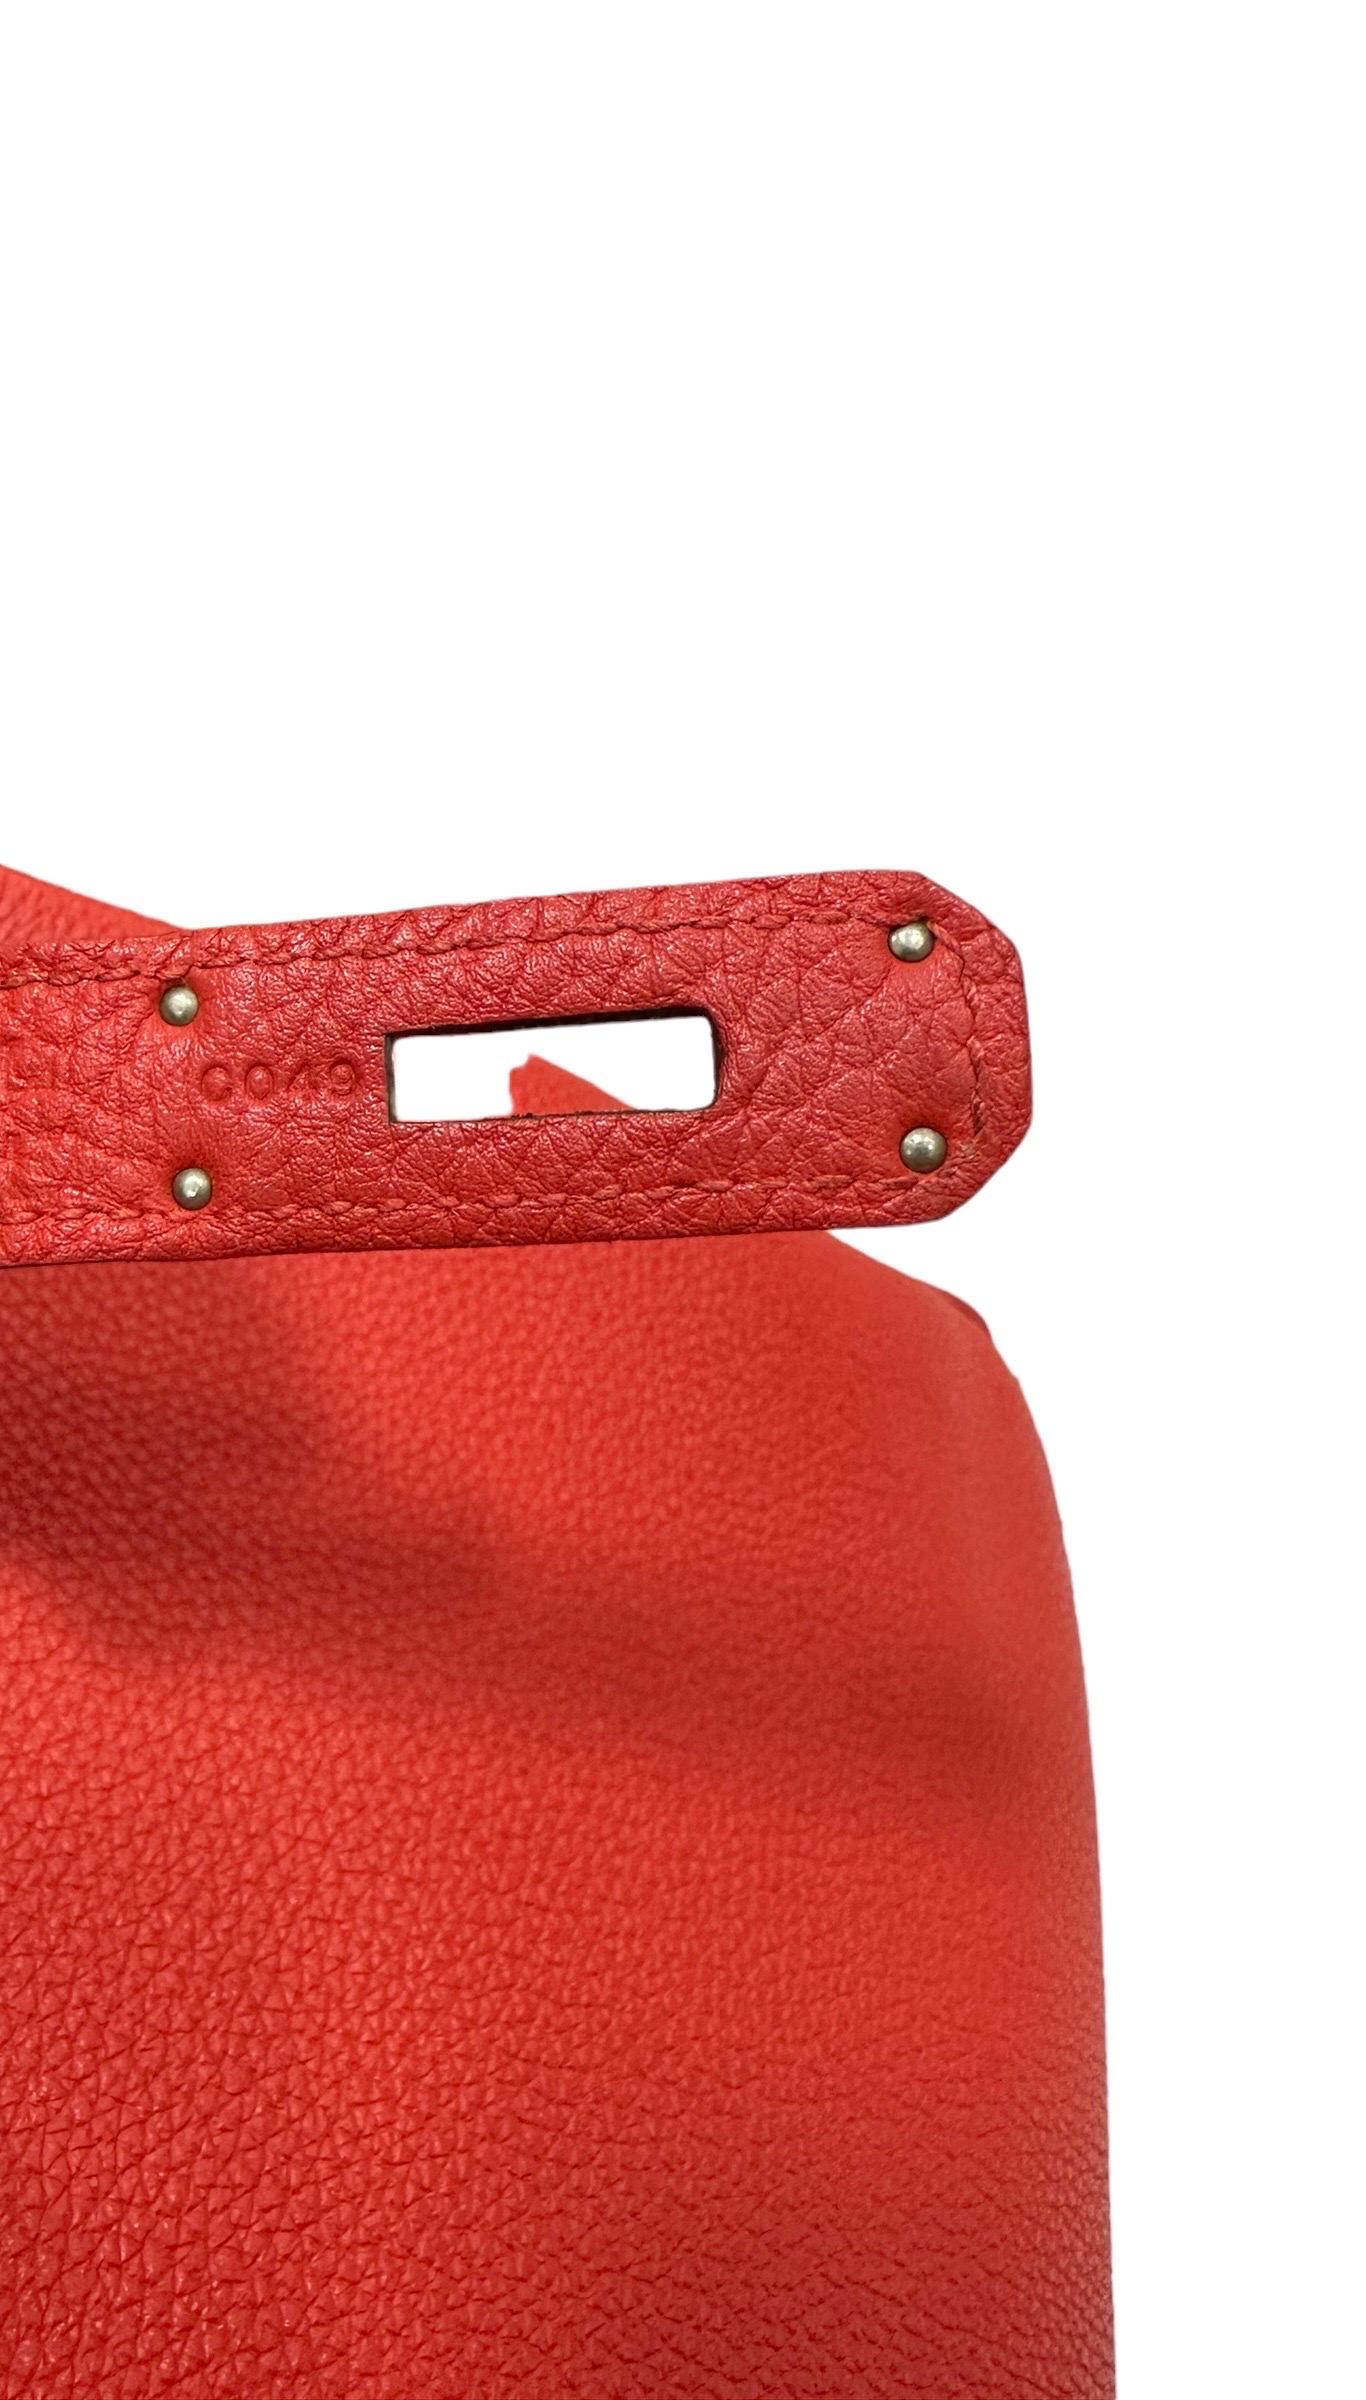 2011 Hermès Birkin 35 Togo Leather Rouge Capucine Top Handle Bag For Sale 5